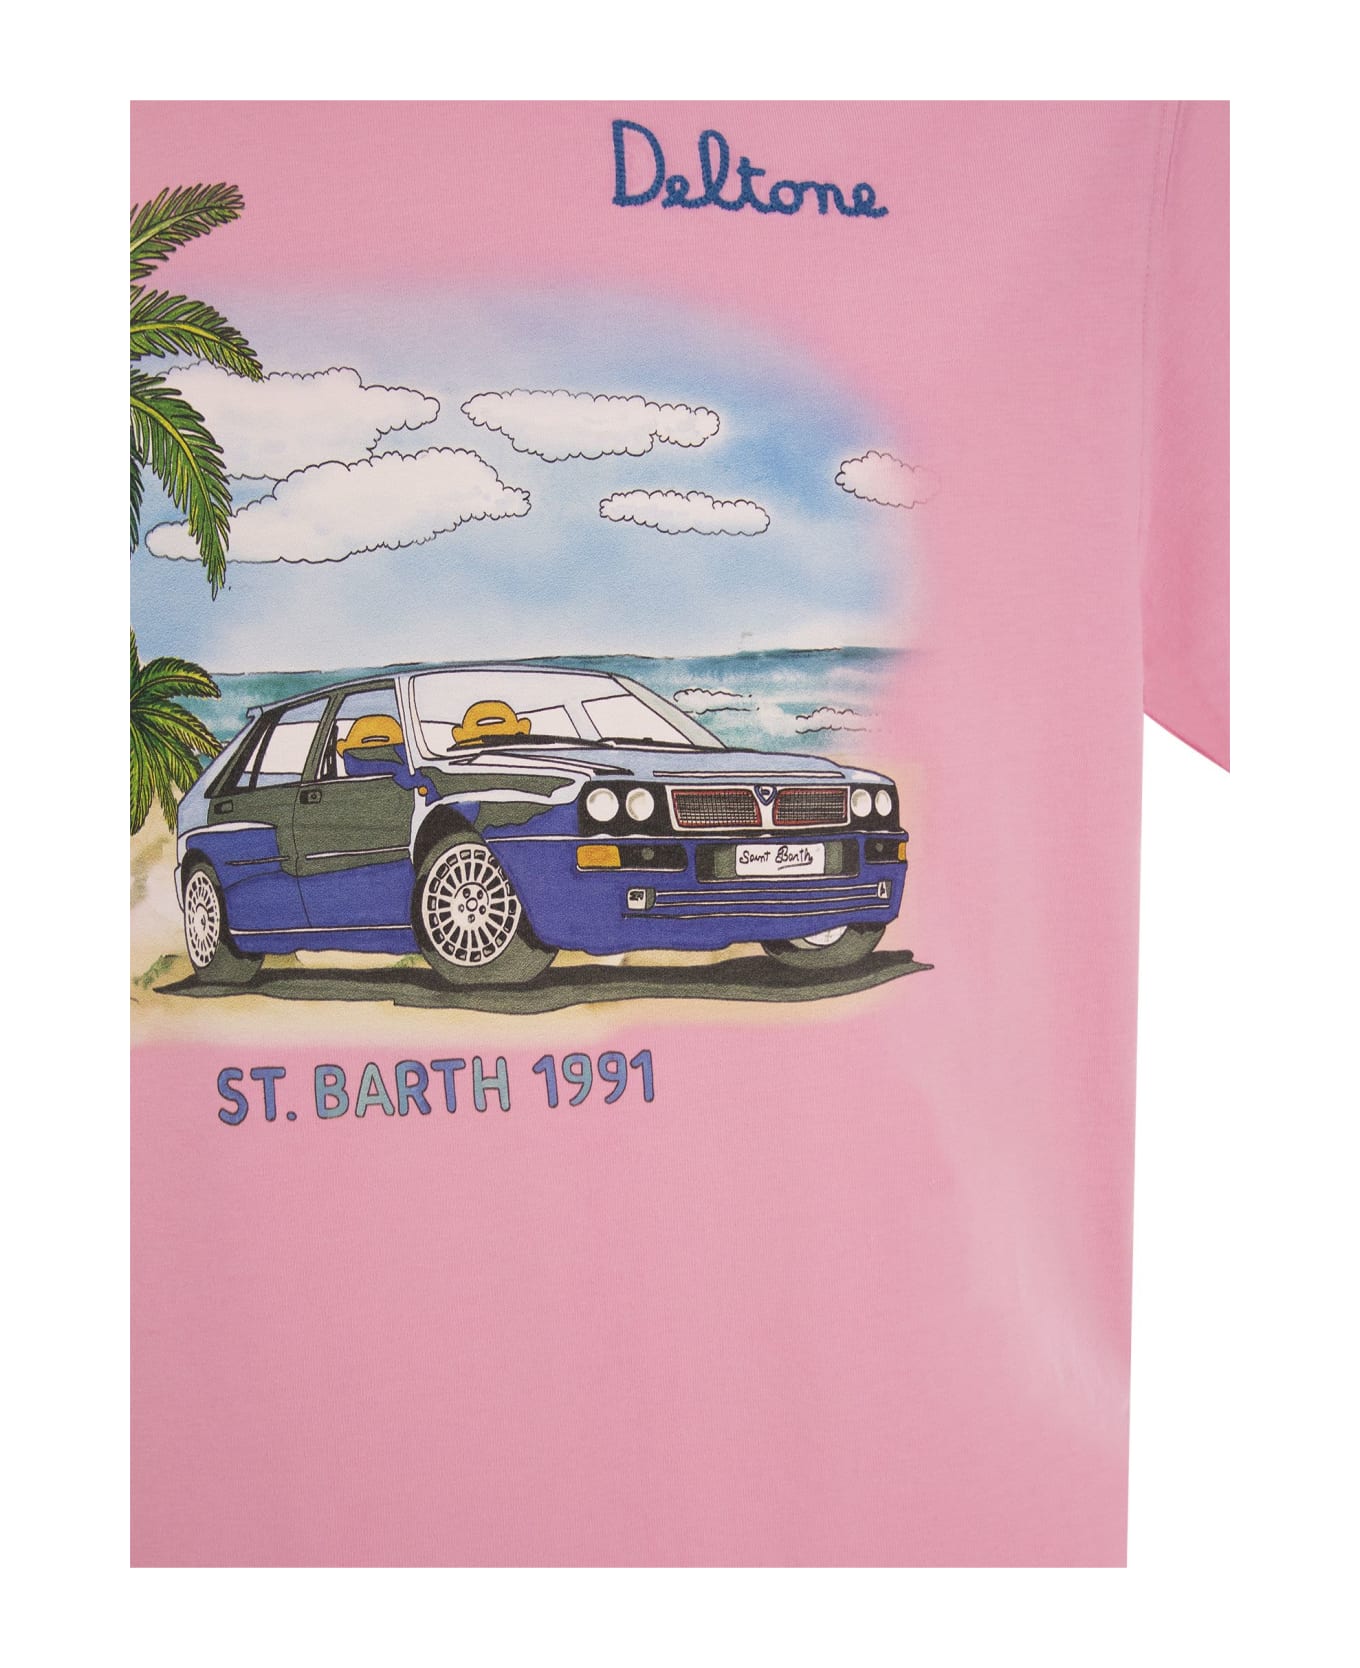 MC2 Saint Barth Cotton T-shirt With Lancia Palm Print - Pink シャツ